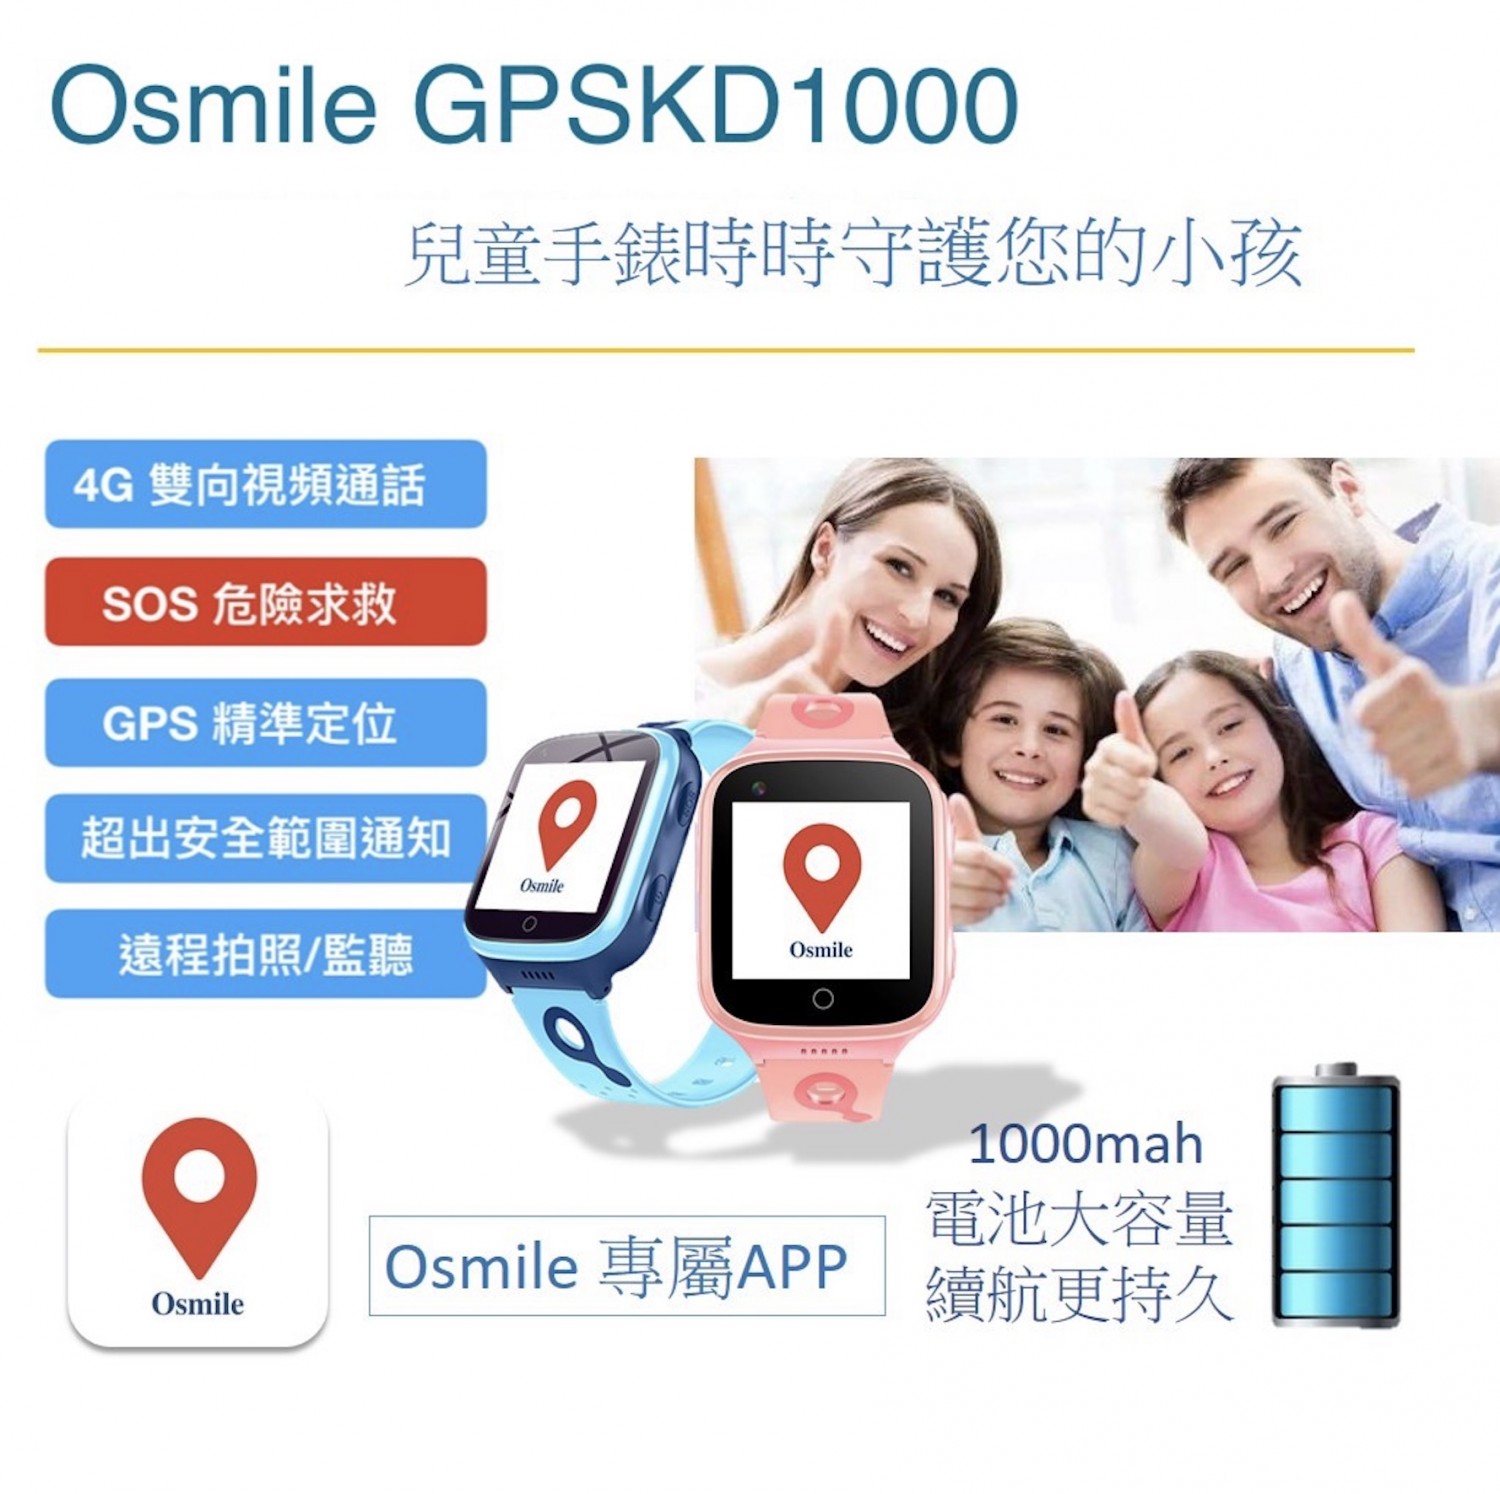 Osmile GPSKD1000 GPS SOS 兒童定位手錶